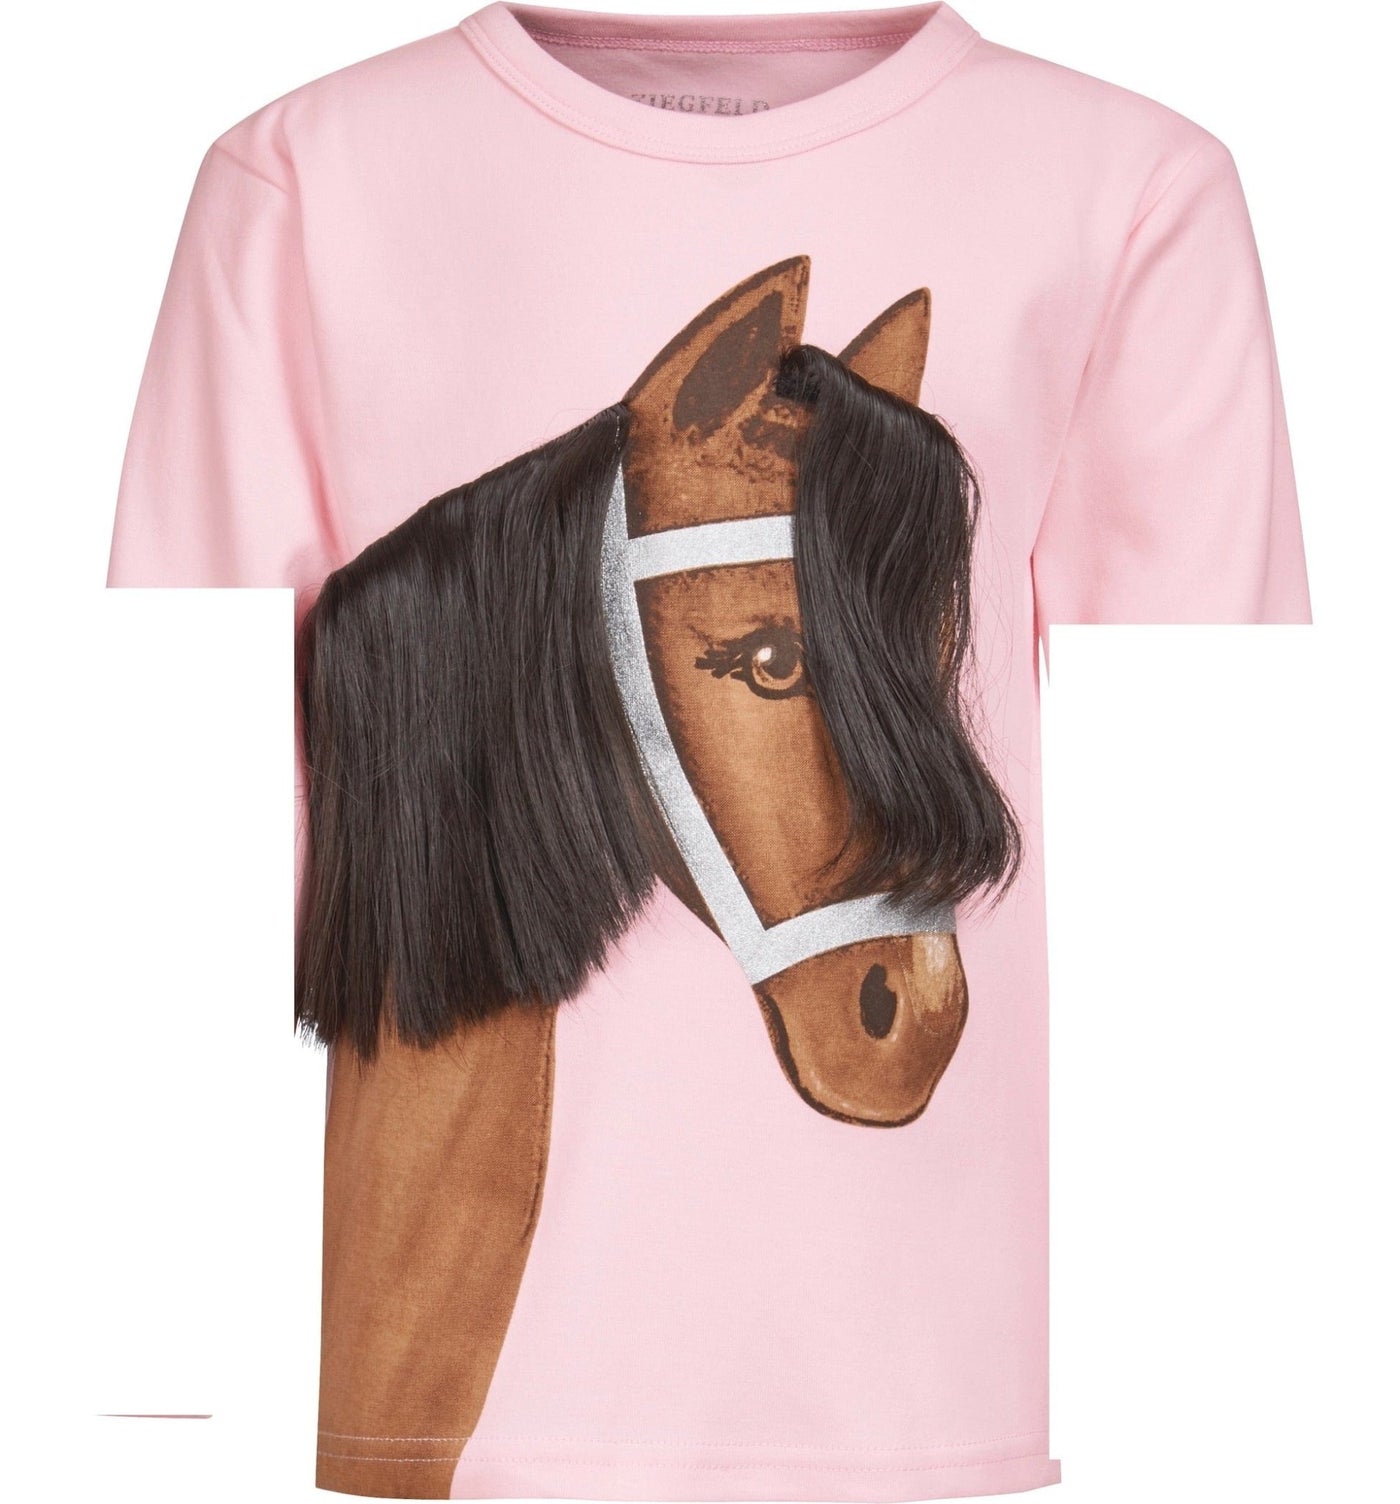 Pony Linda Shirt mit echter Mähne! - ZIEGFELD Kids